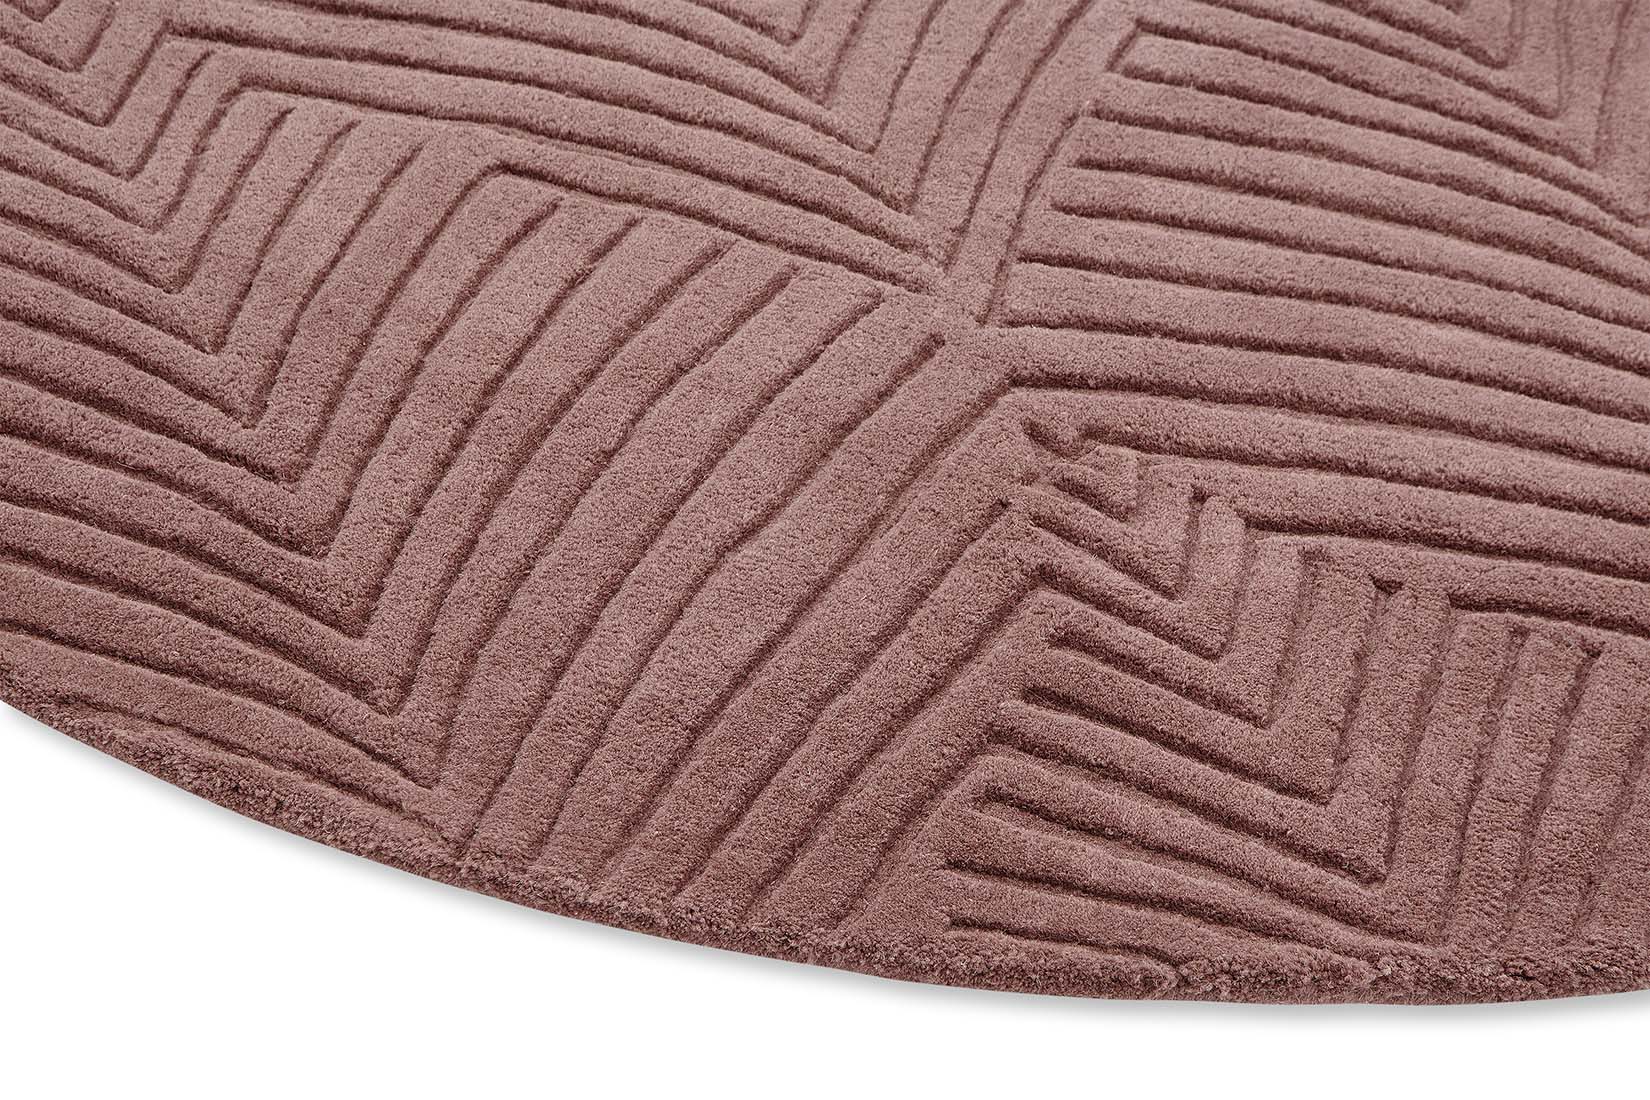 Circular mink rug with engraved leaf pattern
